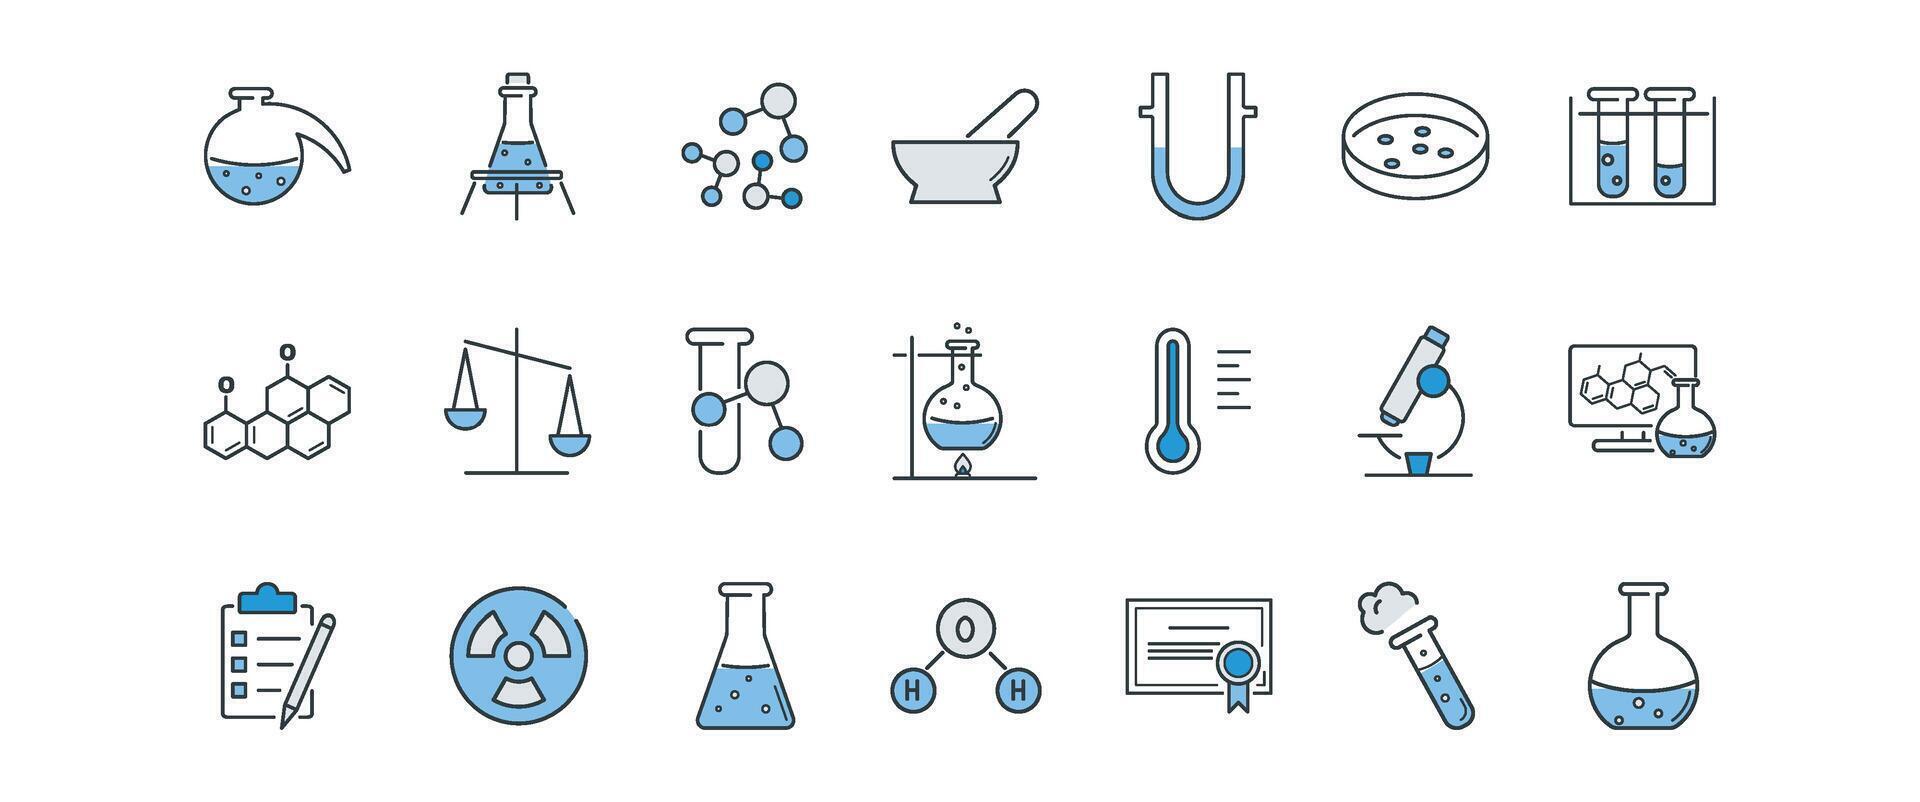 Chemical Laboratory line icons set. Flask, mortar, pestle, scale, molecule, test tube, flask, retort, burner, flame, certificate, petri dish vector illustration in gray and blue. Editable stroke